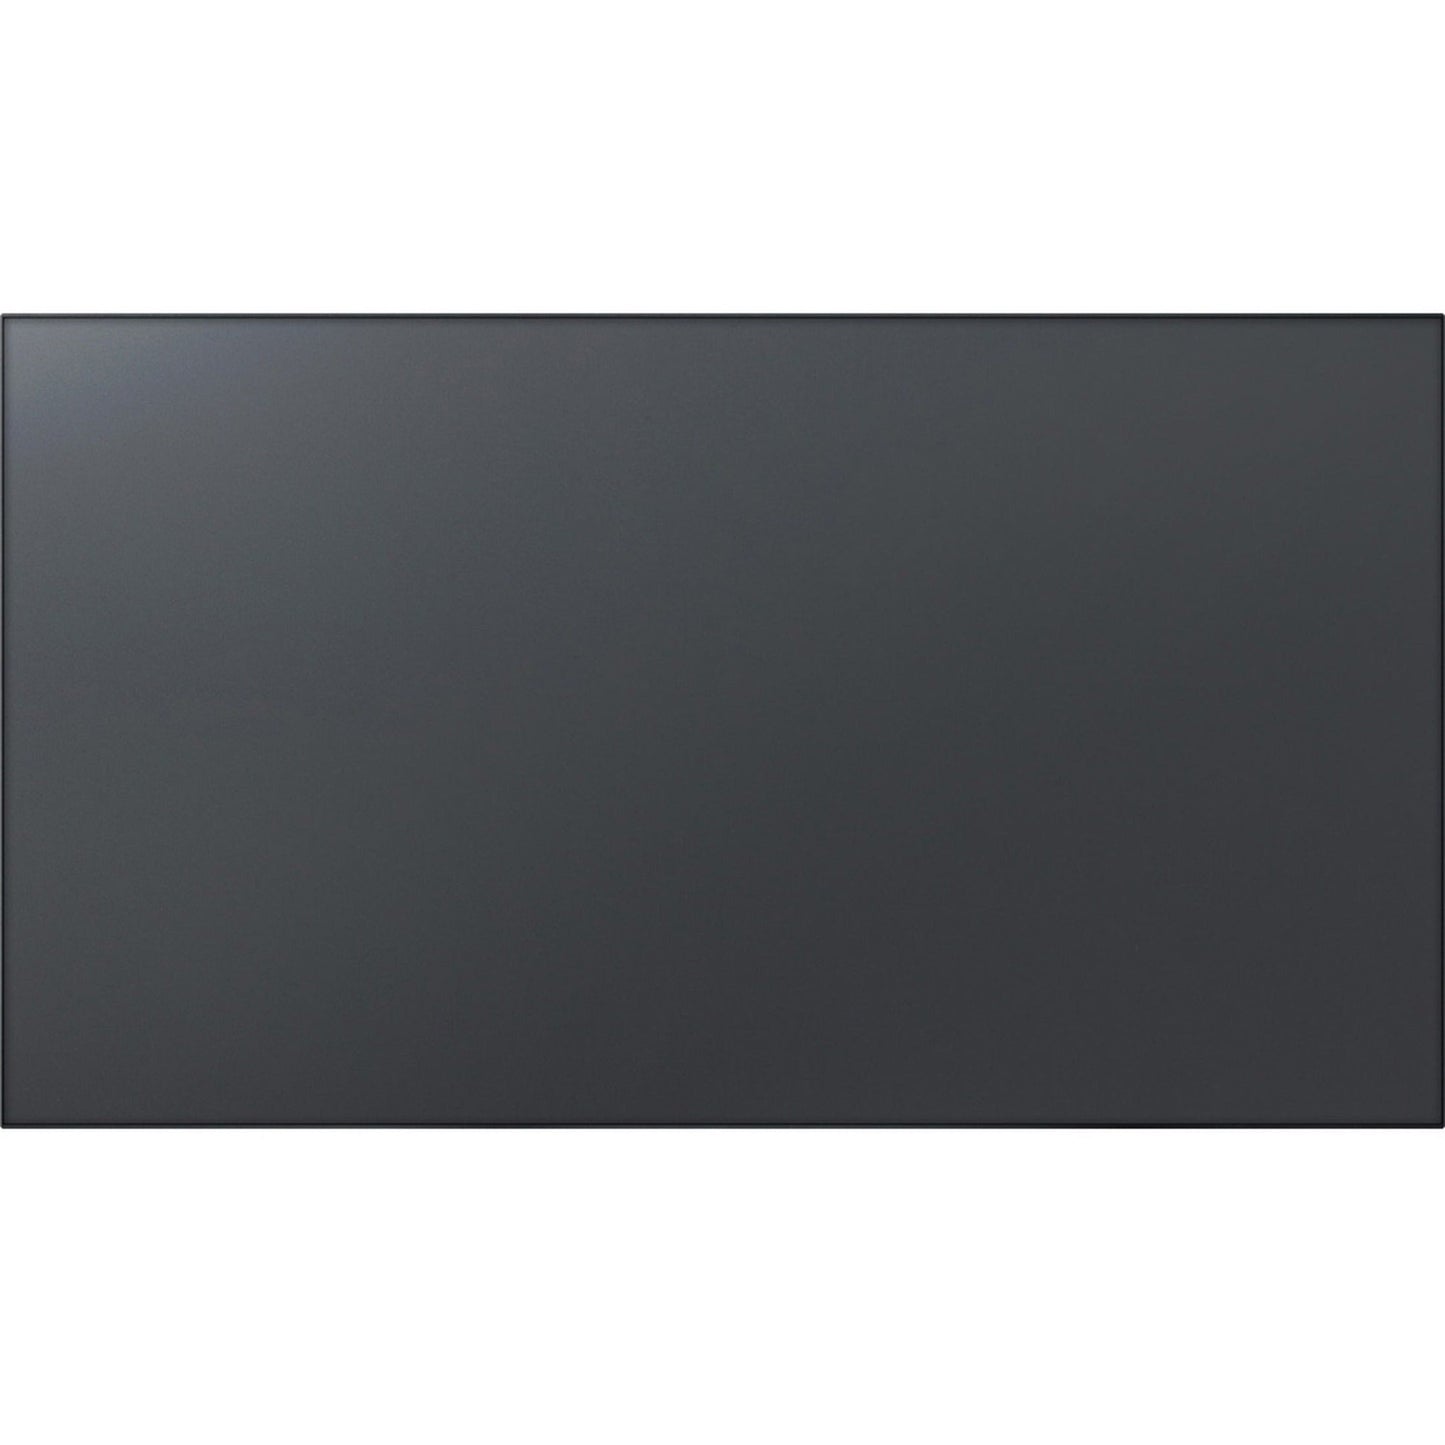 Panasonic 55-inch Class Ultra Narrow Bezel LCD Display TH-55LFV8U